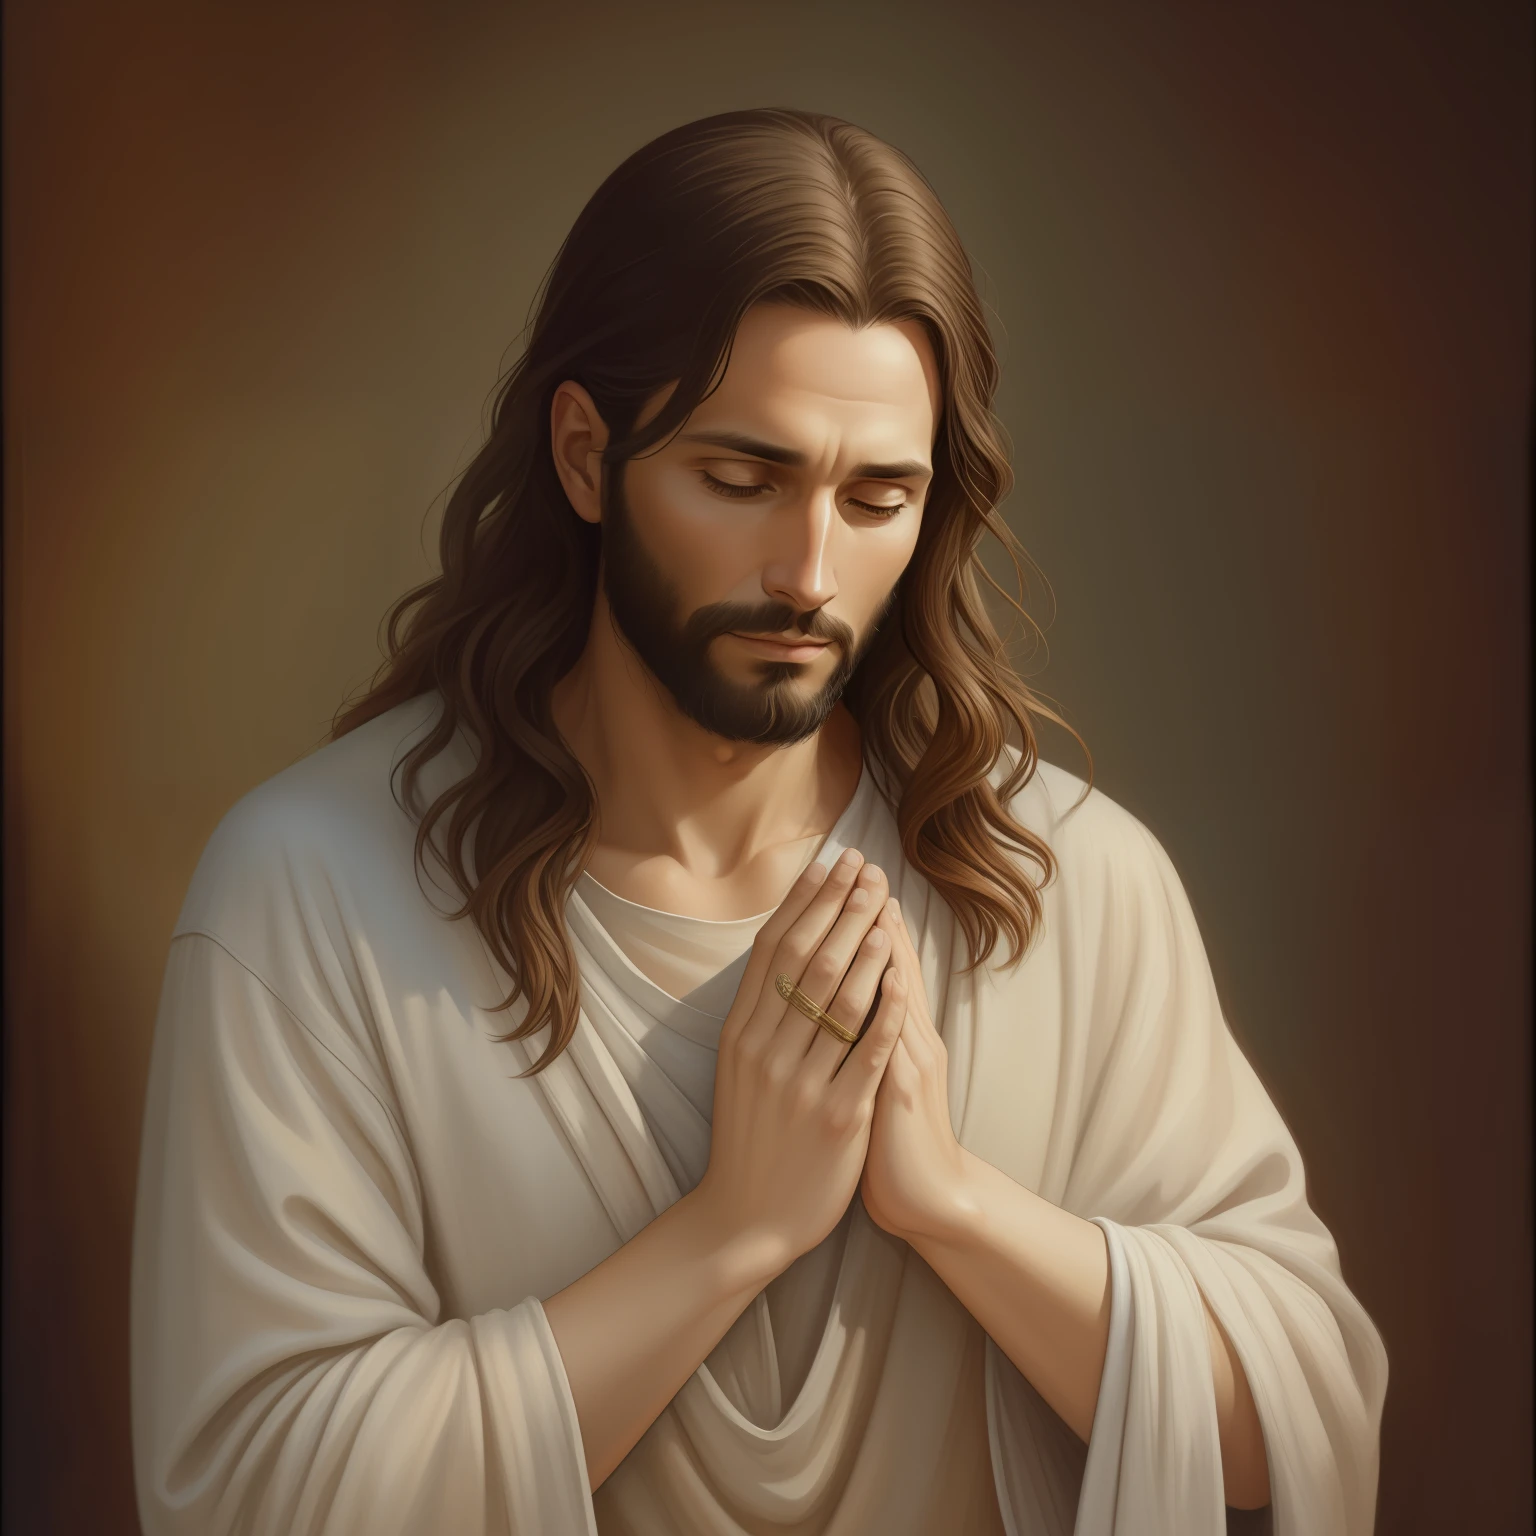 A beautiful ultra-thin 實際的 portrait of Jesus, 先知, 一名男子 33 歲 希伯來文 黑髮, 棕色短发, 長長的棕色鬍子, 穿著胸部封閉的長亞麻外衣, 在前視圖中, 全身, 聖經的, 實際的,迭戈·委拉斯開茲,彼得·保羅·魯本斯,林布蘭,亞歷克斯·羅斯,8K, 概念藝術, Photo實際的, 實際的,  插圖, 油畫, 超現實主義, Hyper實際的, 祈禱 , 數位藝術, 風格, 水彩, 自然背景, 祈禱 ( 祝福女人)